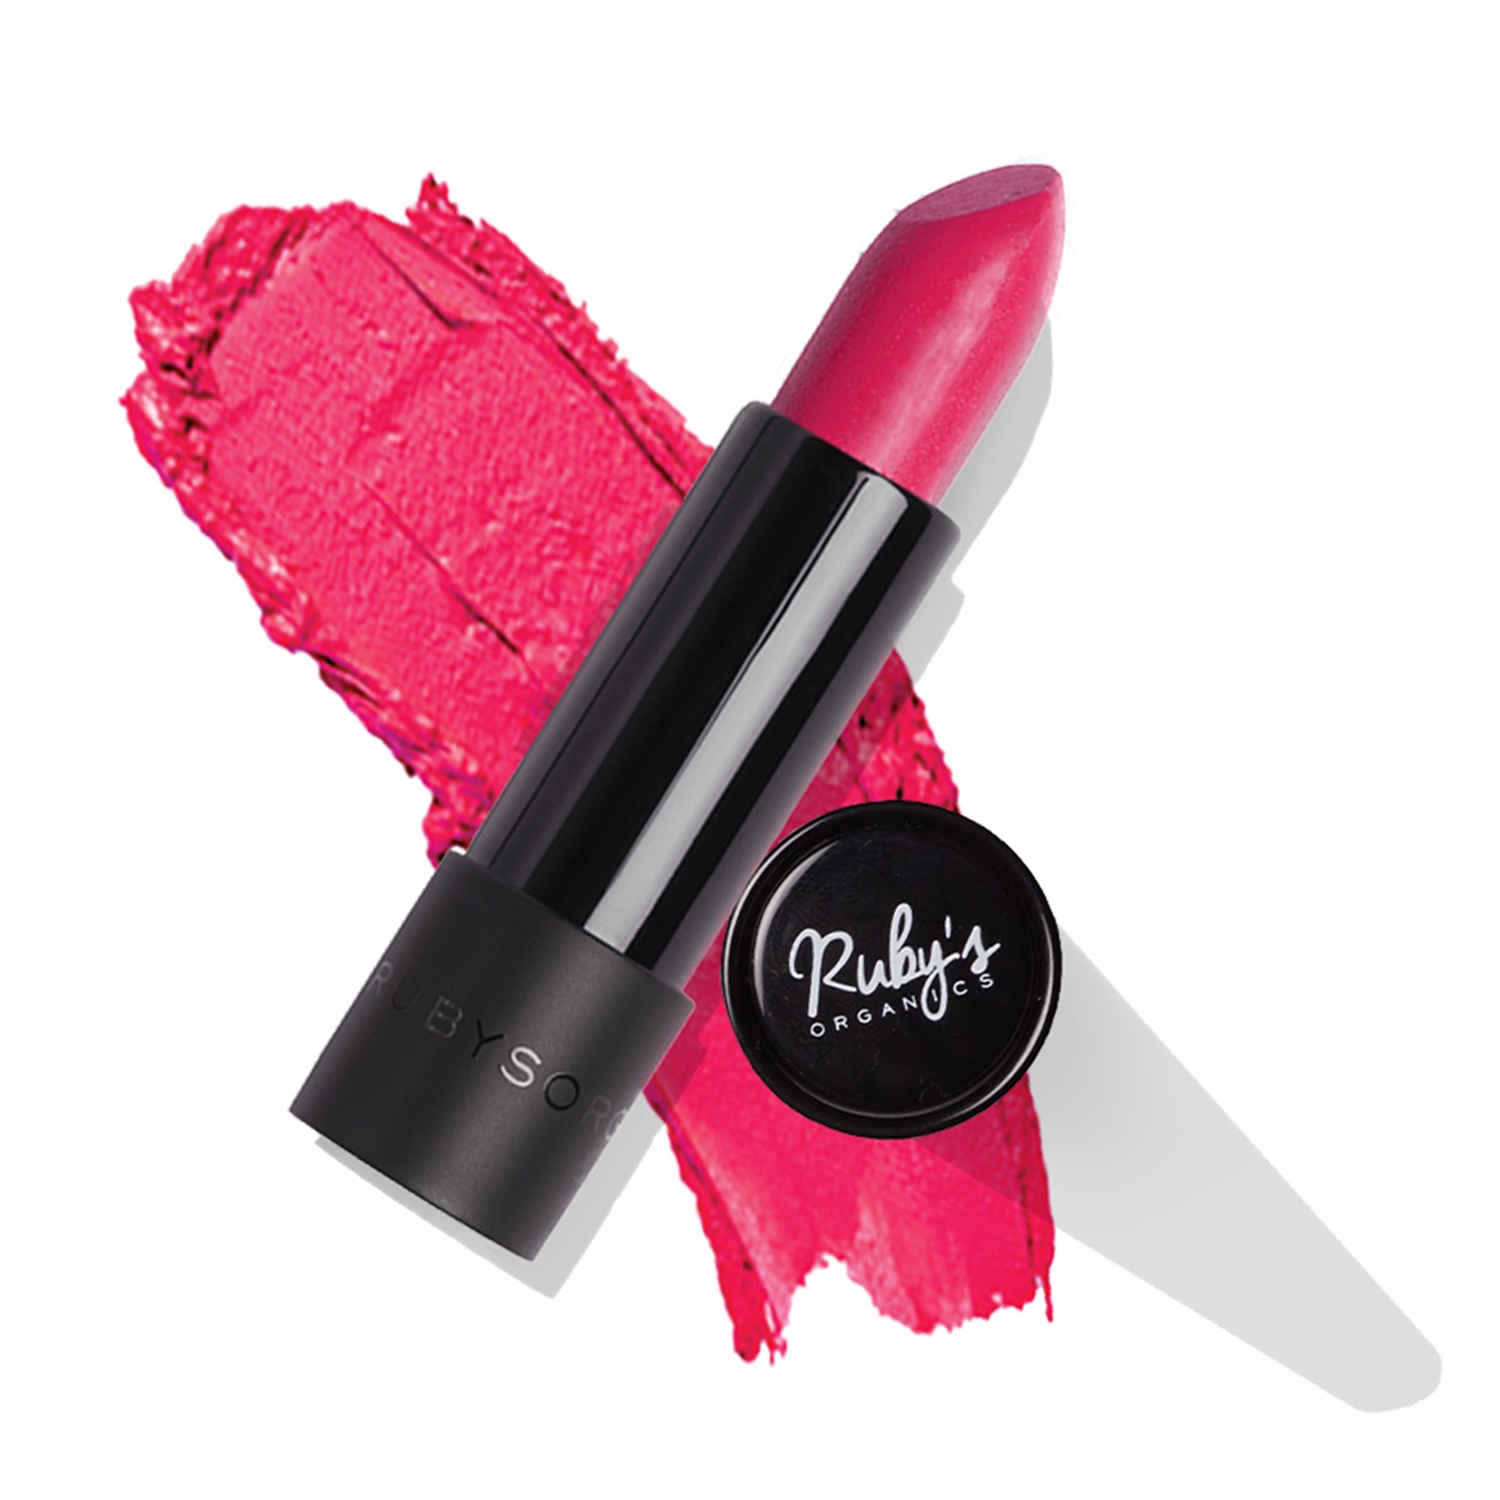 Ruby's Organics Lipstick - Rani (3.7g)